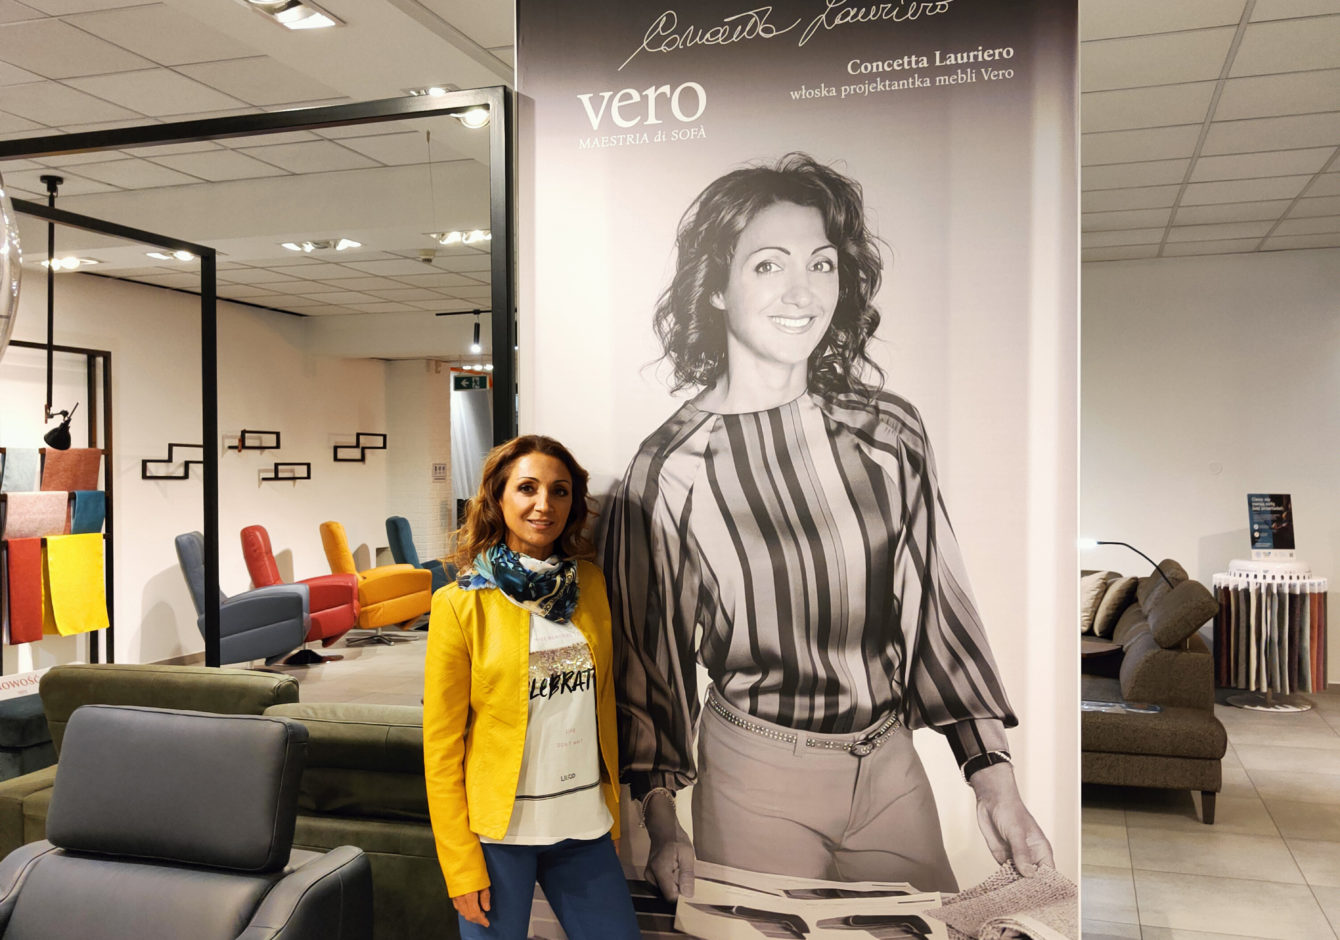 Concetta Lauriero Designer and Brand Ambassador for the brand VERO.pl